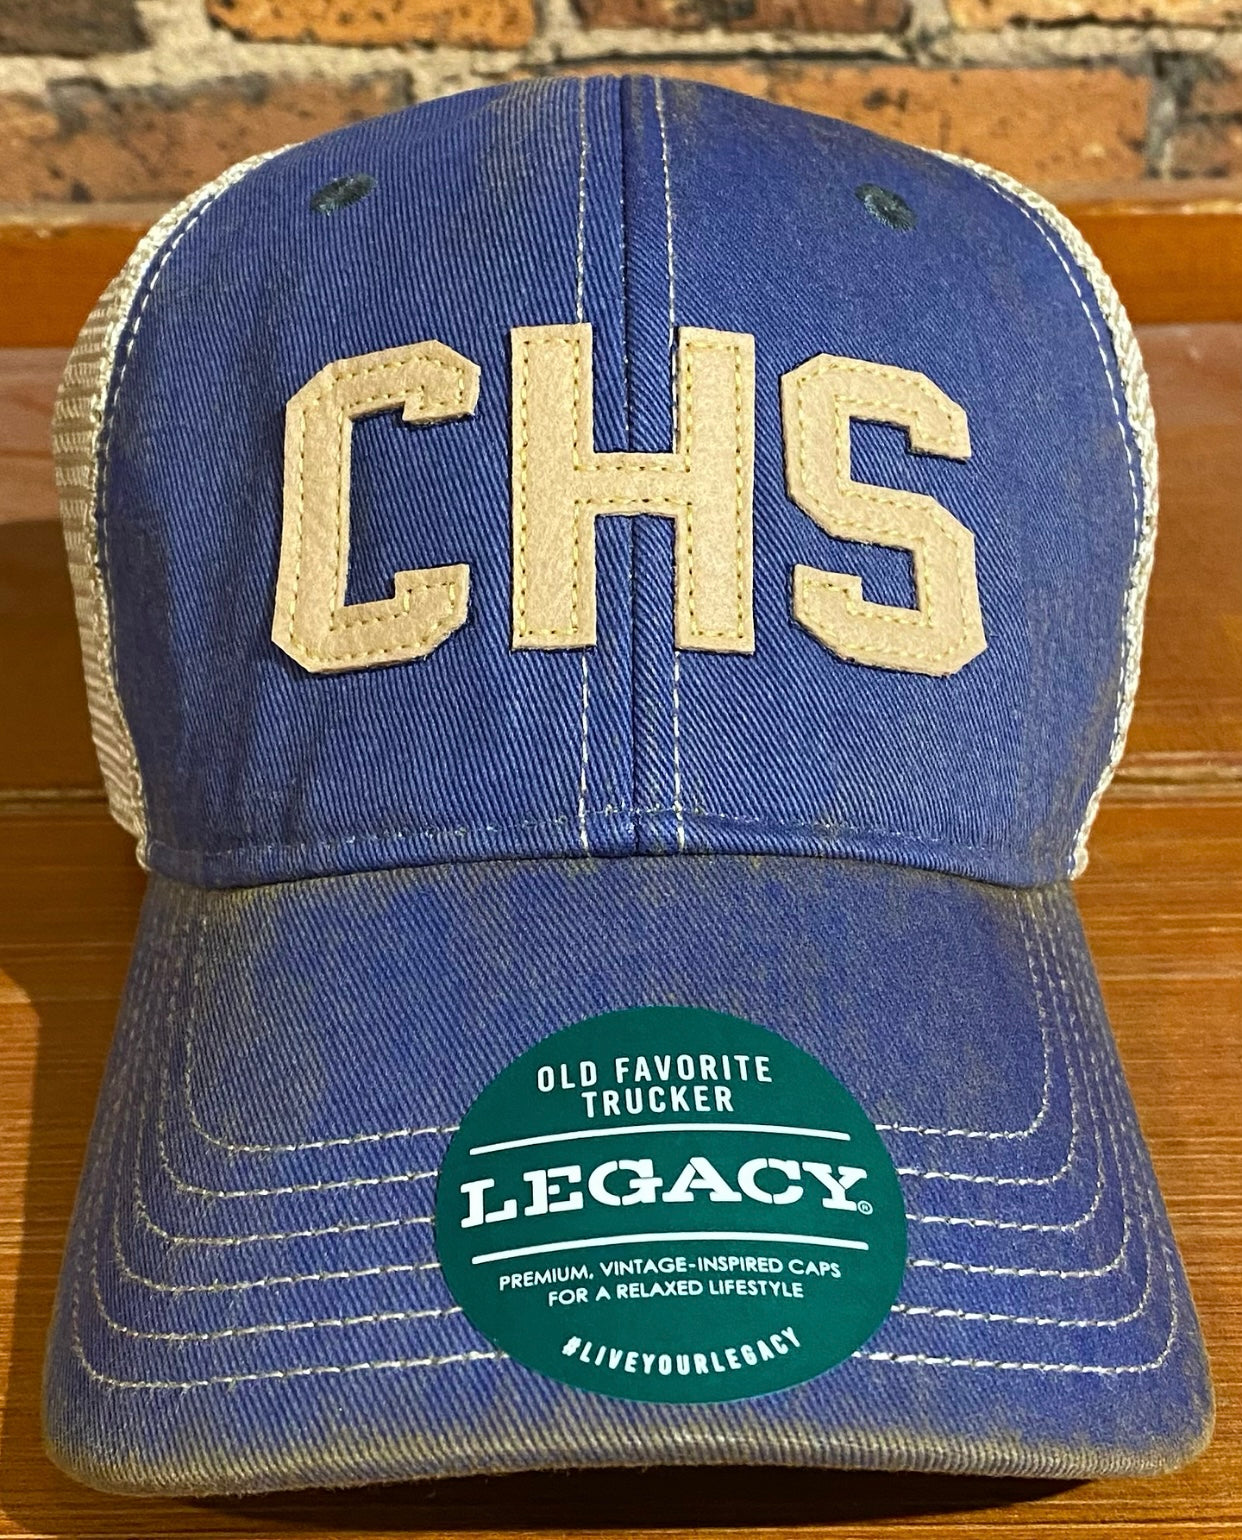 Charleston 'CHS' Hat - Legacy